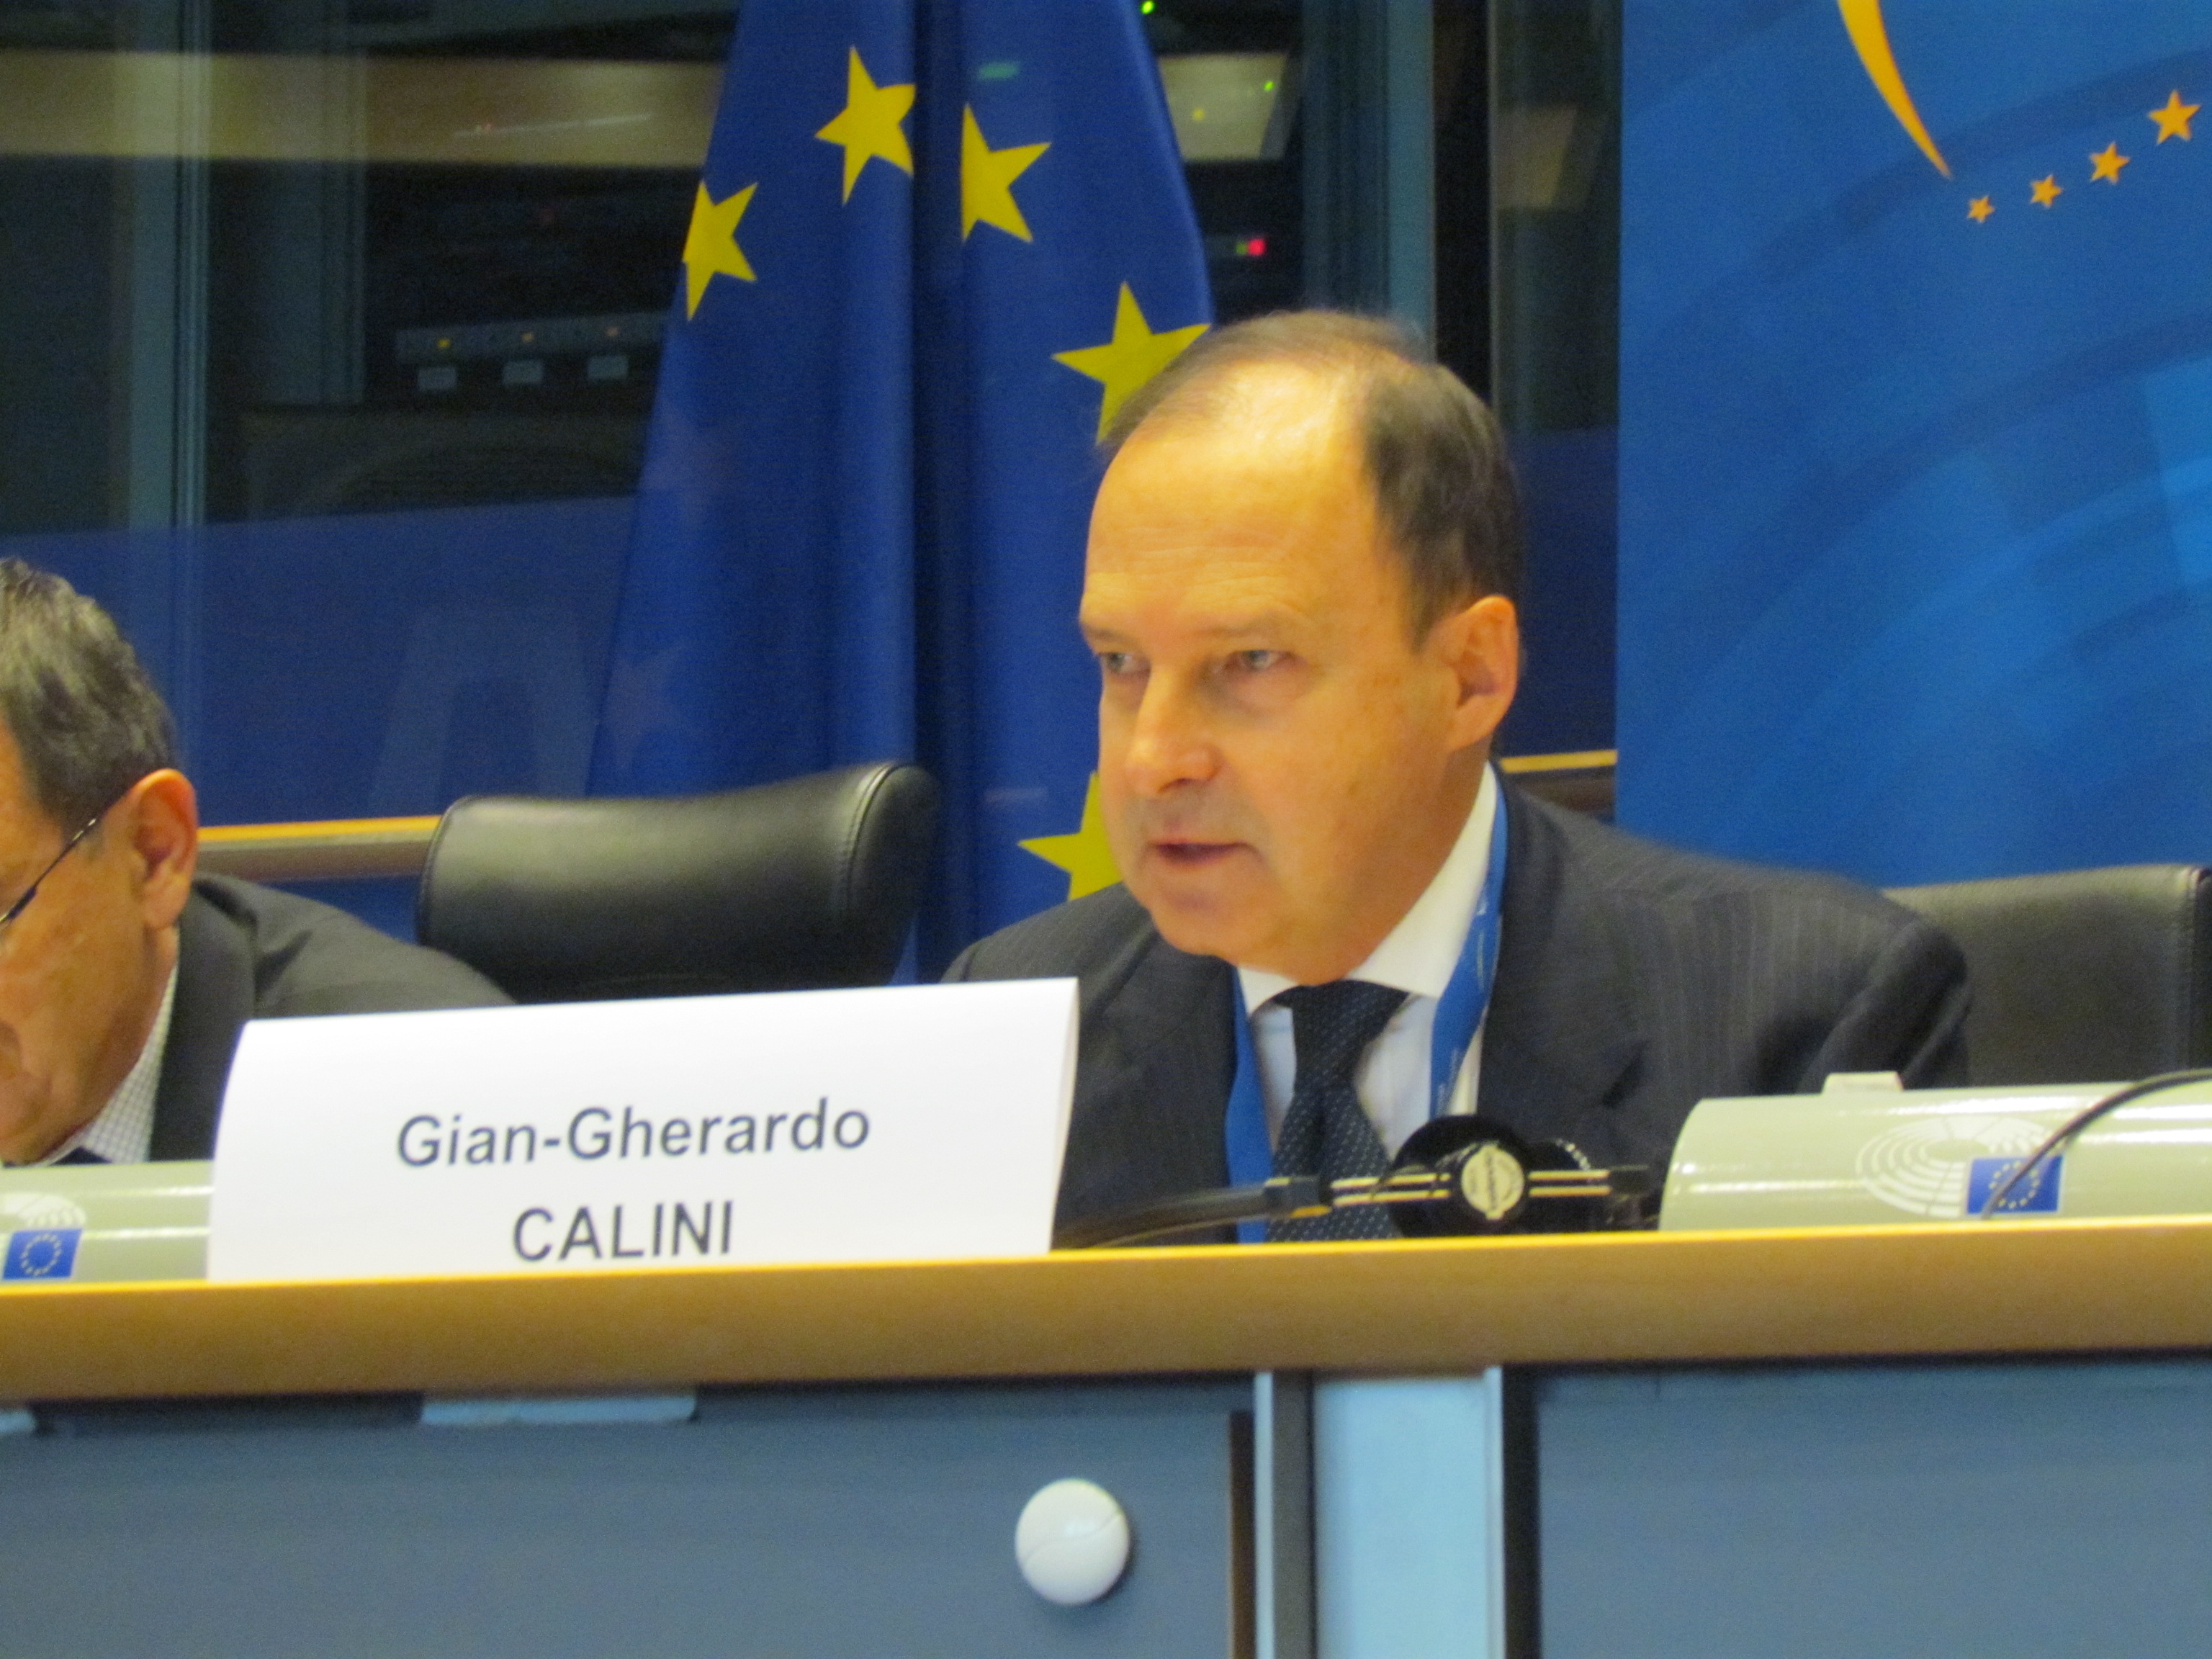 The GSA’s Gian-Gherardo Calini speaking at the EBAA debate